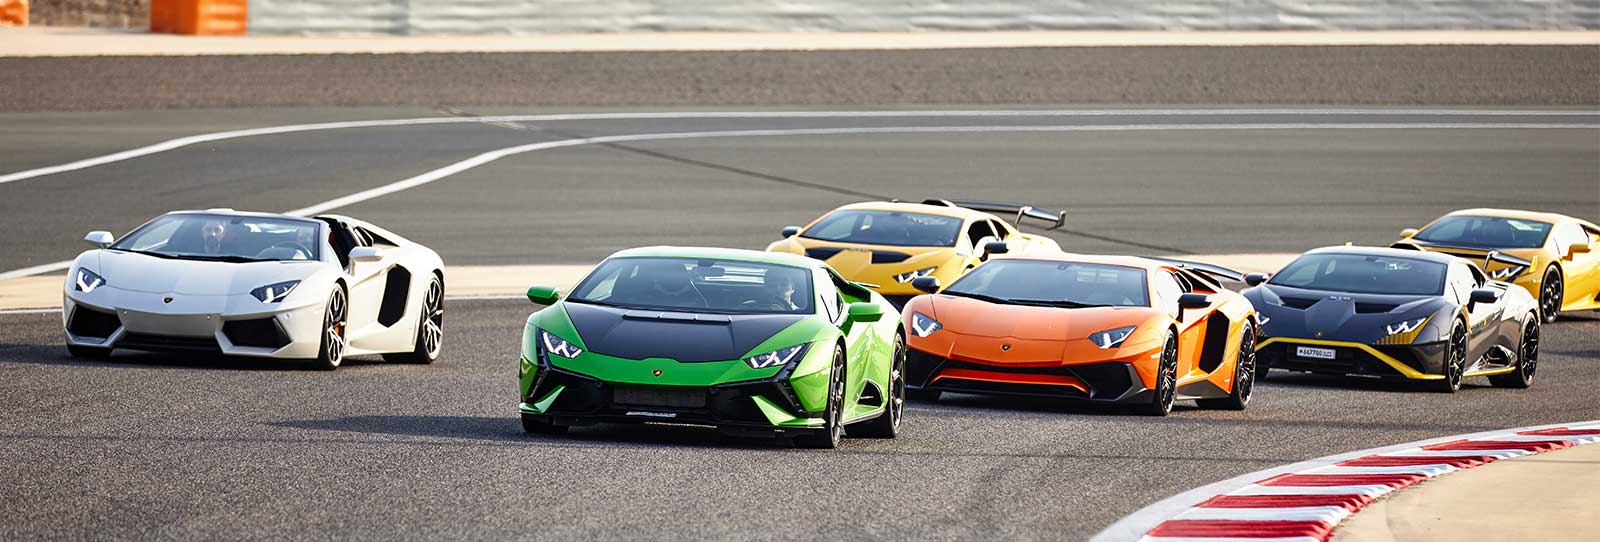 Lamborghini Bahrain: Absolute Driving Experience | Behbehani Brothers w ...